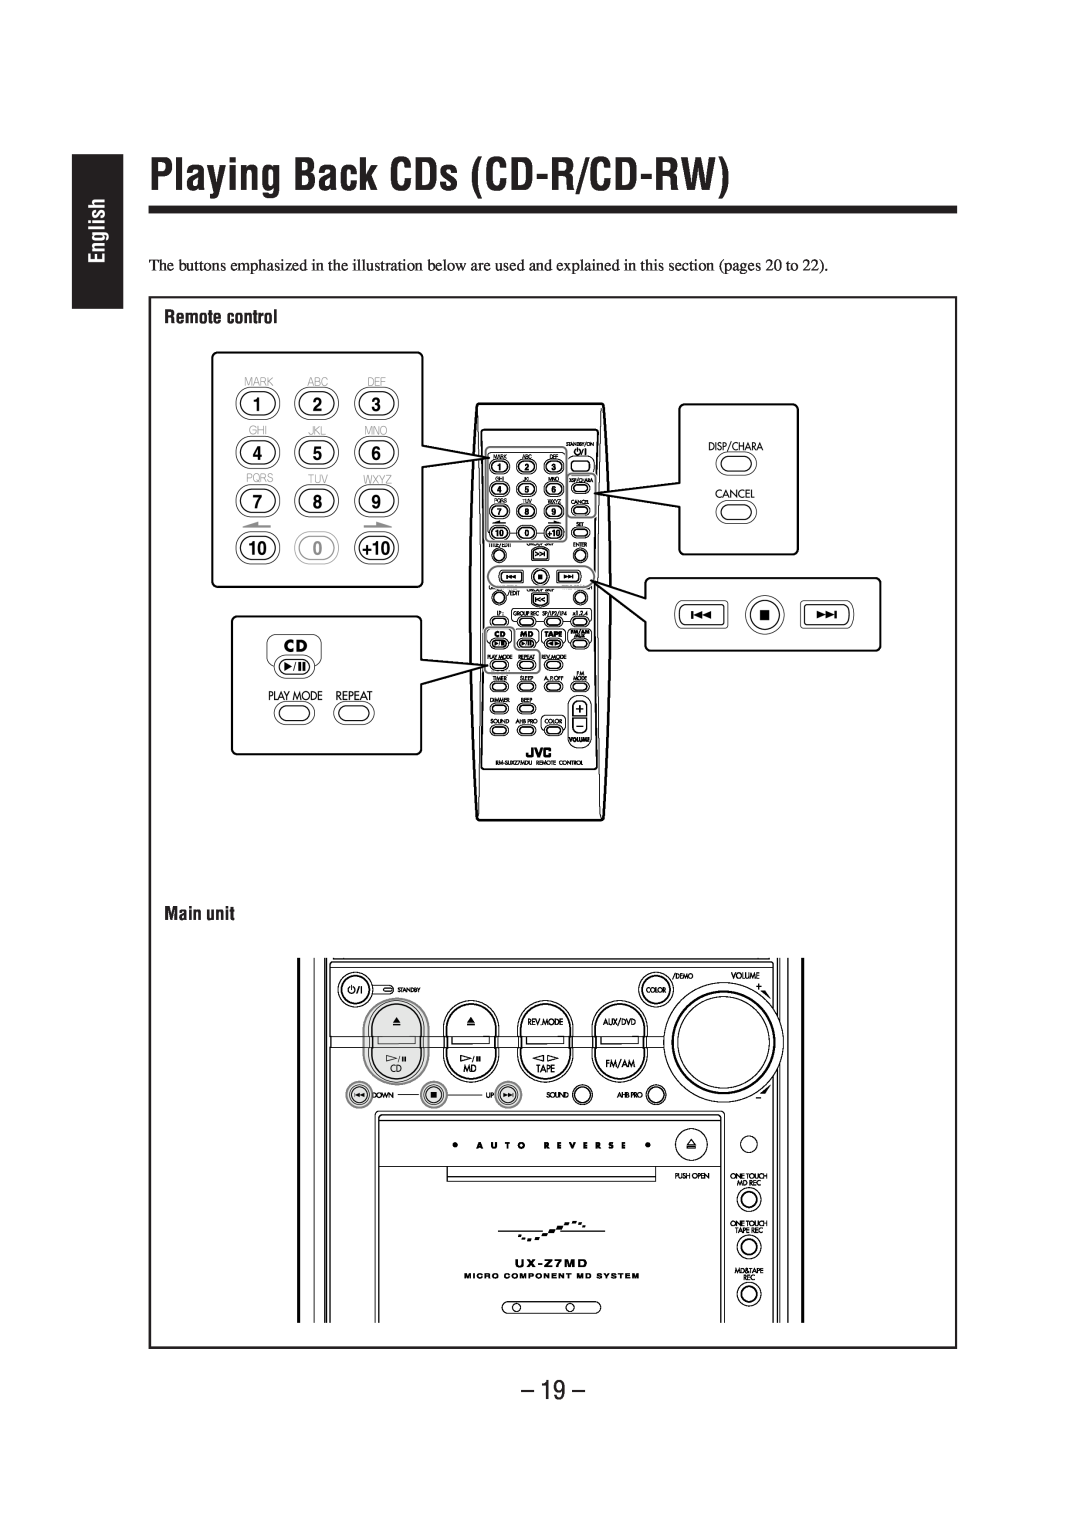 JVC LVT0900-004A, CA-UXZ7MD manual Playing Back CDs CD-R/CD-RW, English, Remote control, Main unit 